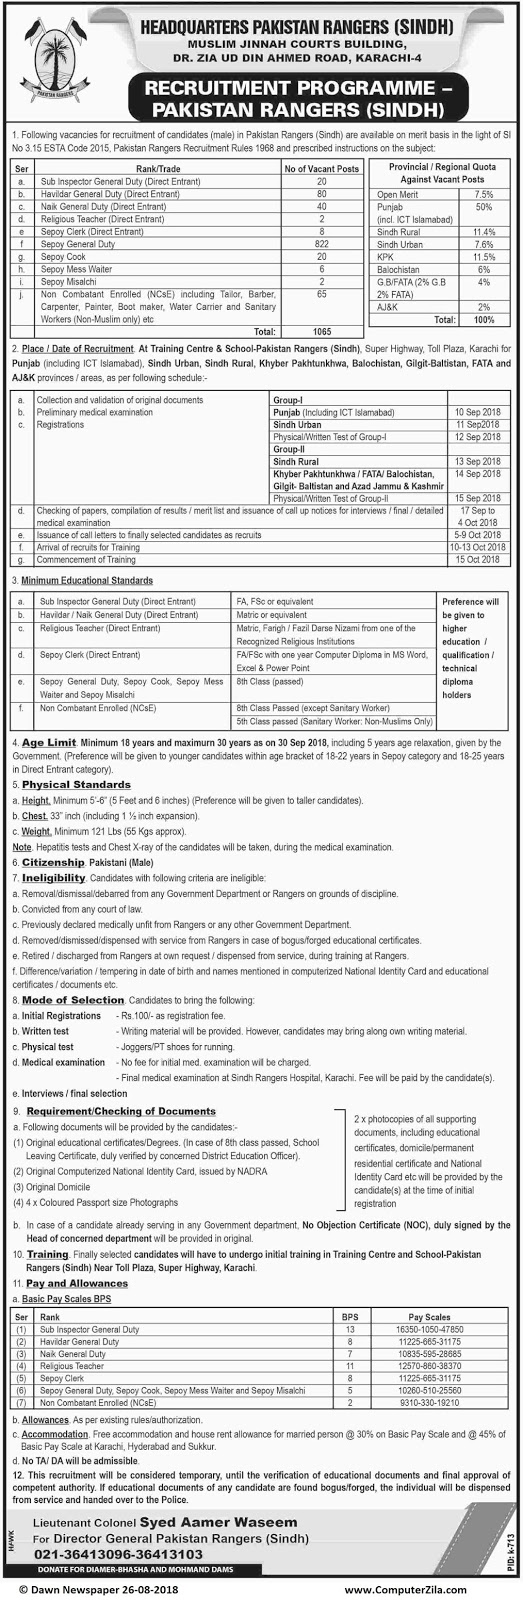 Recruitment Programme at Pakistan Rangers (Sindh)